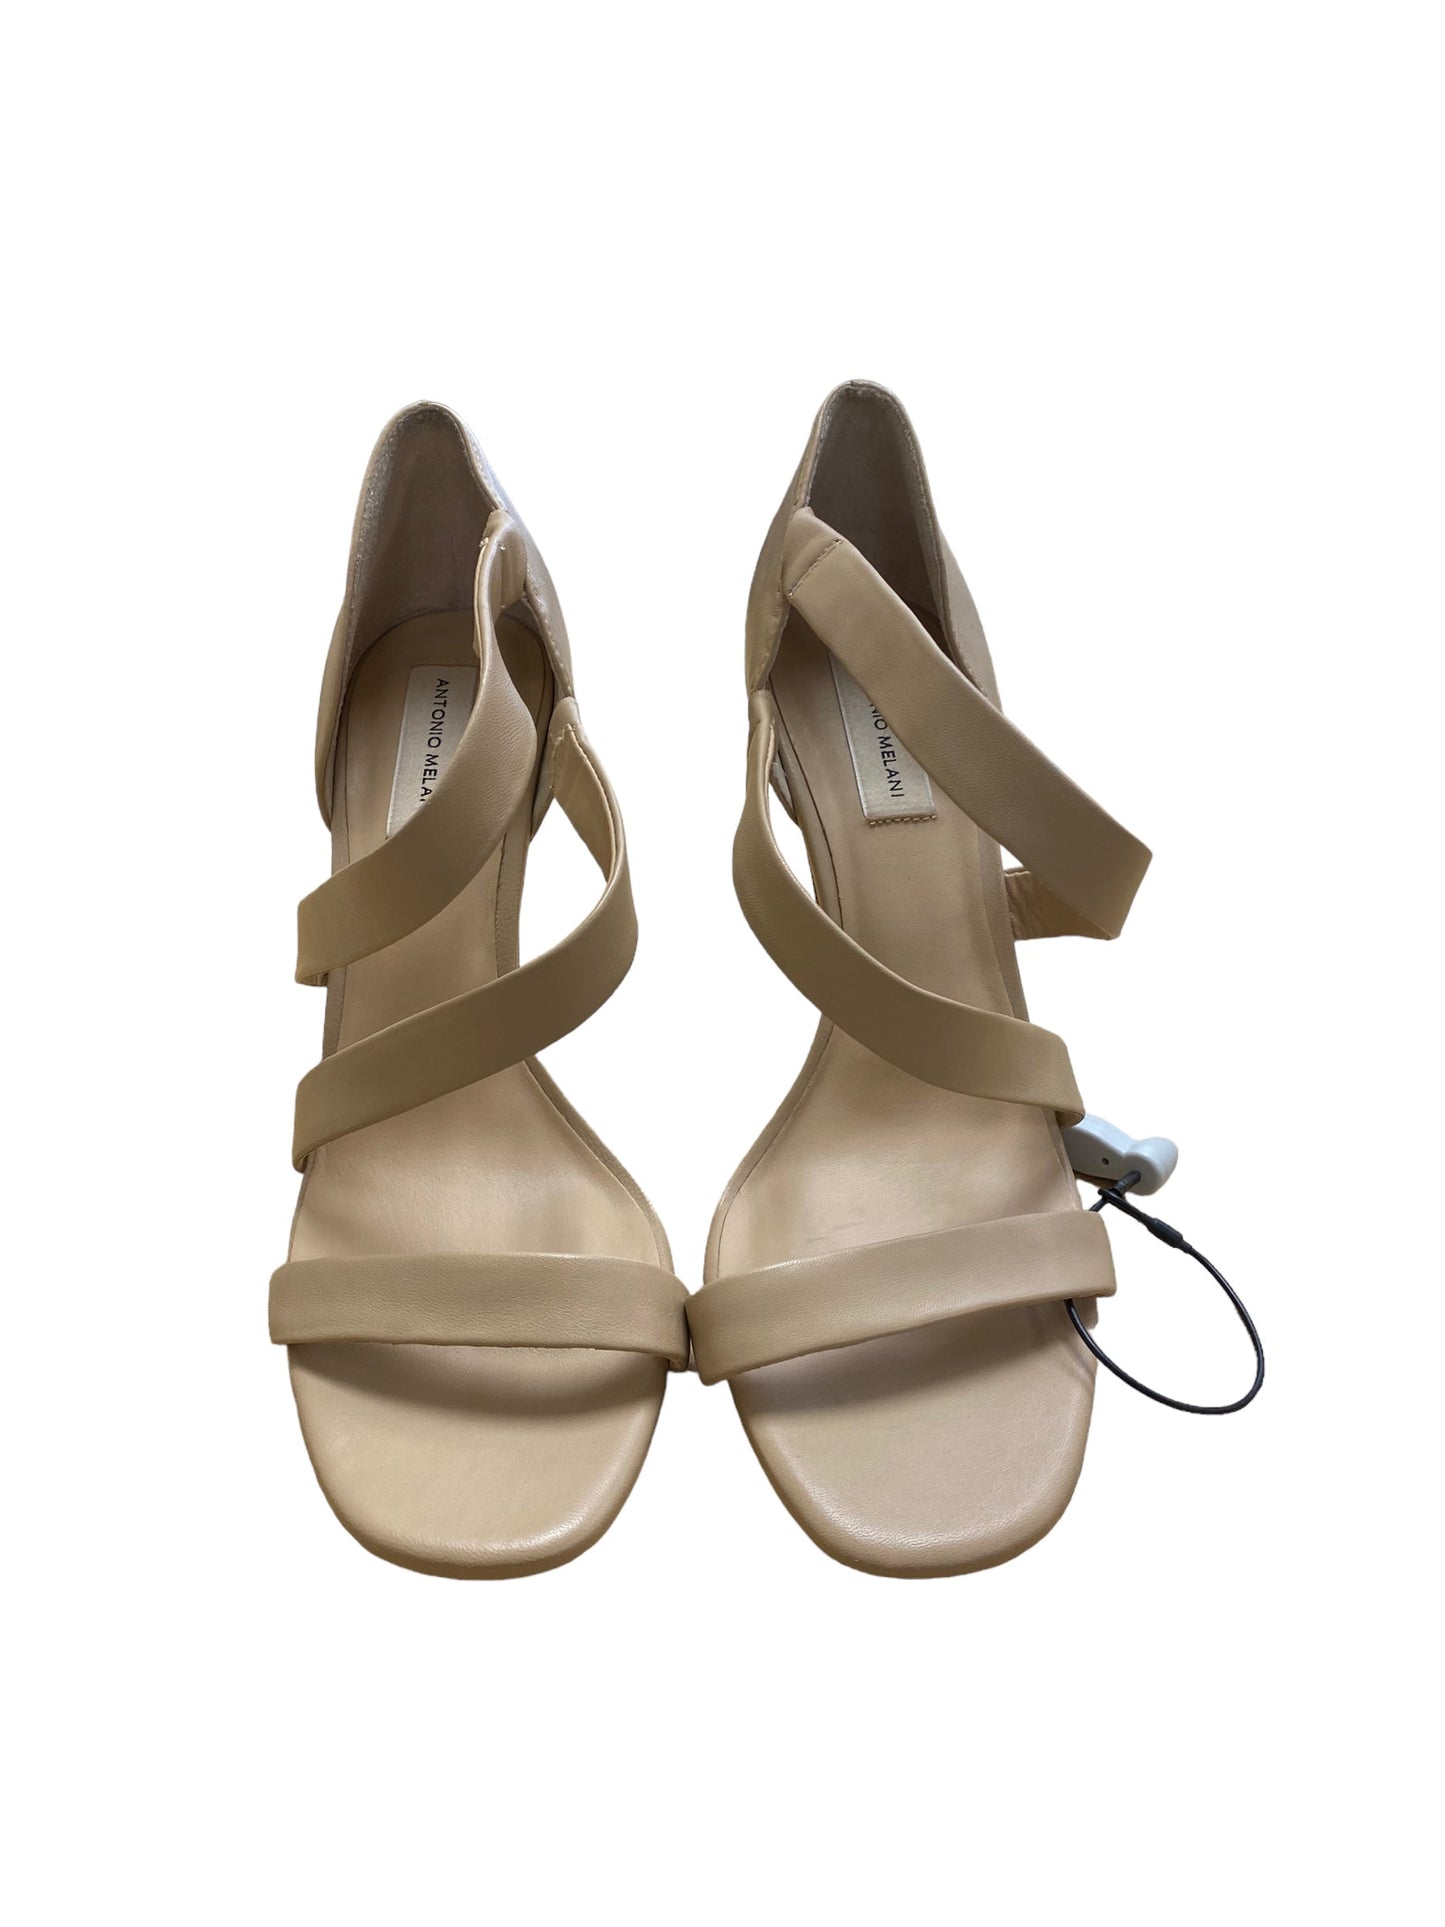 Shoes Heels Stiletto By Antonio Melani  Size: 11